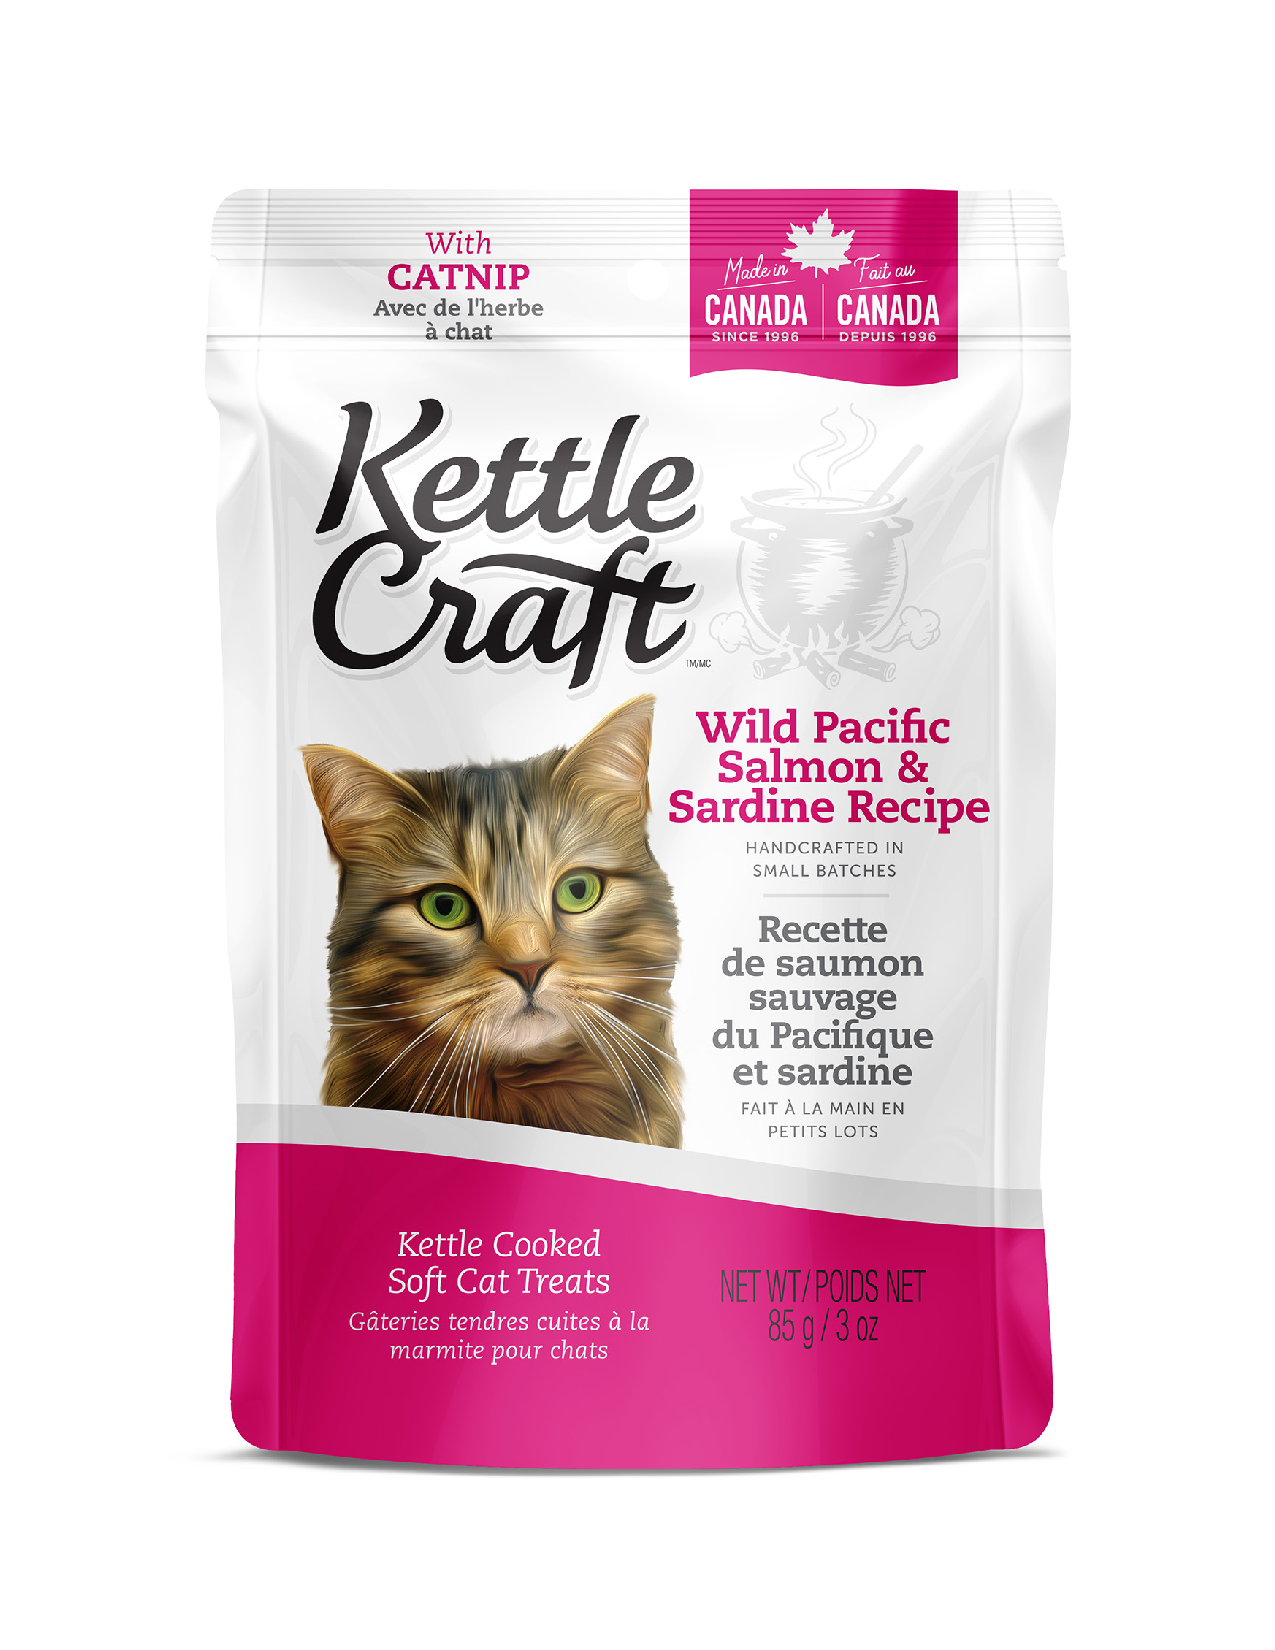 Kettle Craft Cat Treats Wild Pacific Salmon & Sardine Recipe with Catnip